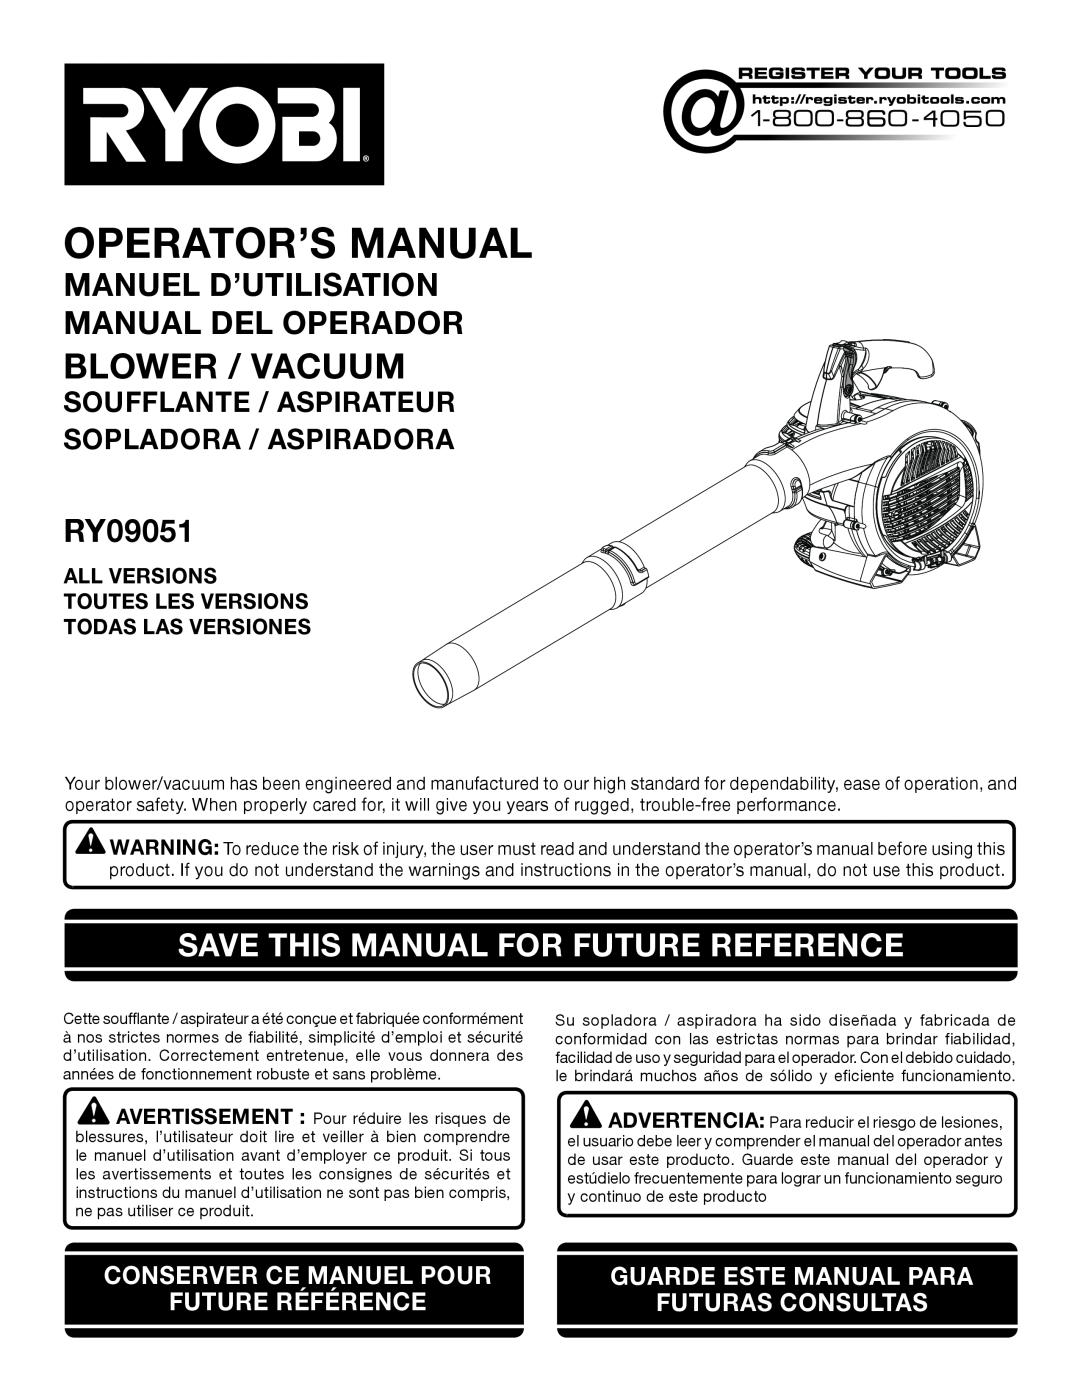 Ryobi RY09051 manuel dutilisation Blower / Vacuum, Save This Manual For Future Reference, Operator’S Manual 